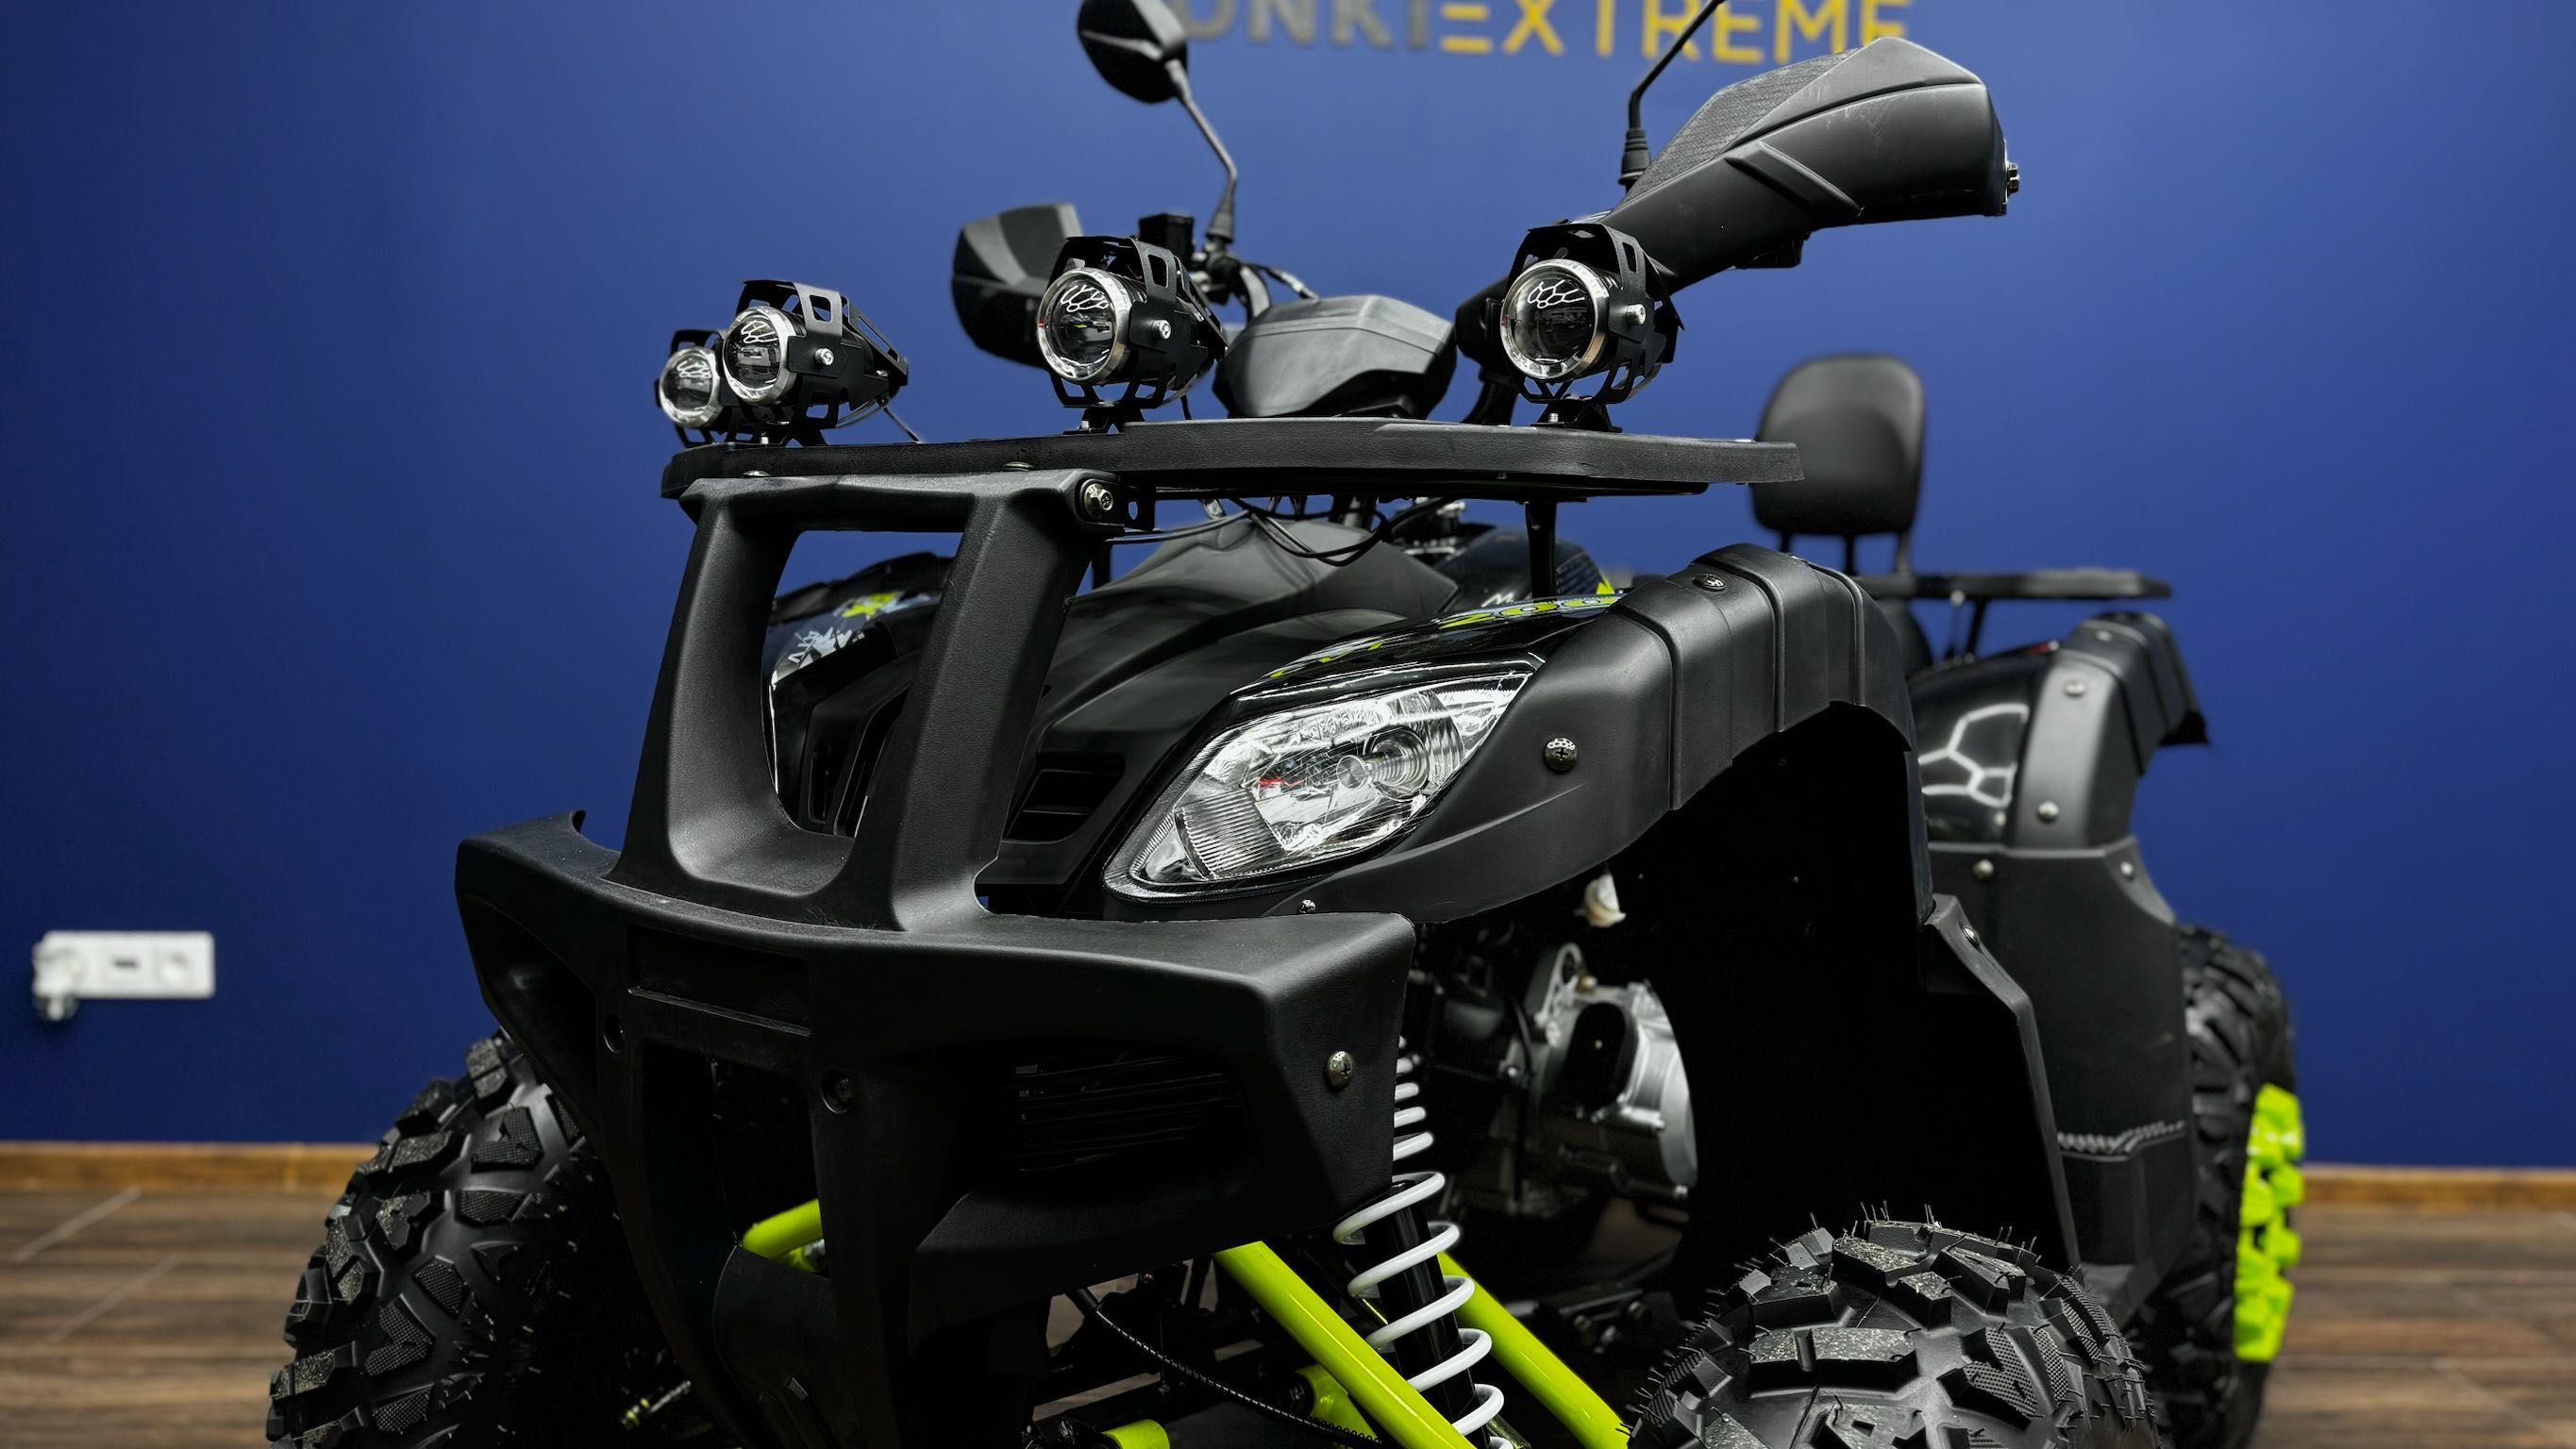 Monki Extreme Quad FX FUXIN  GTR 250  cc + GRATIS !!!